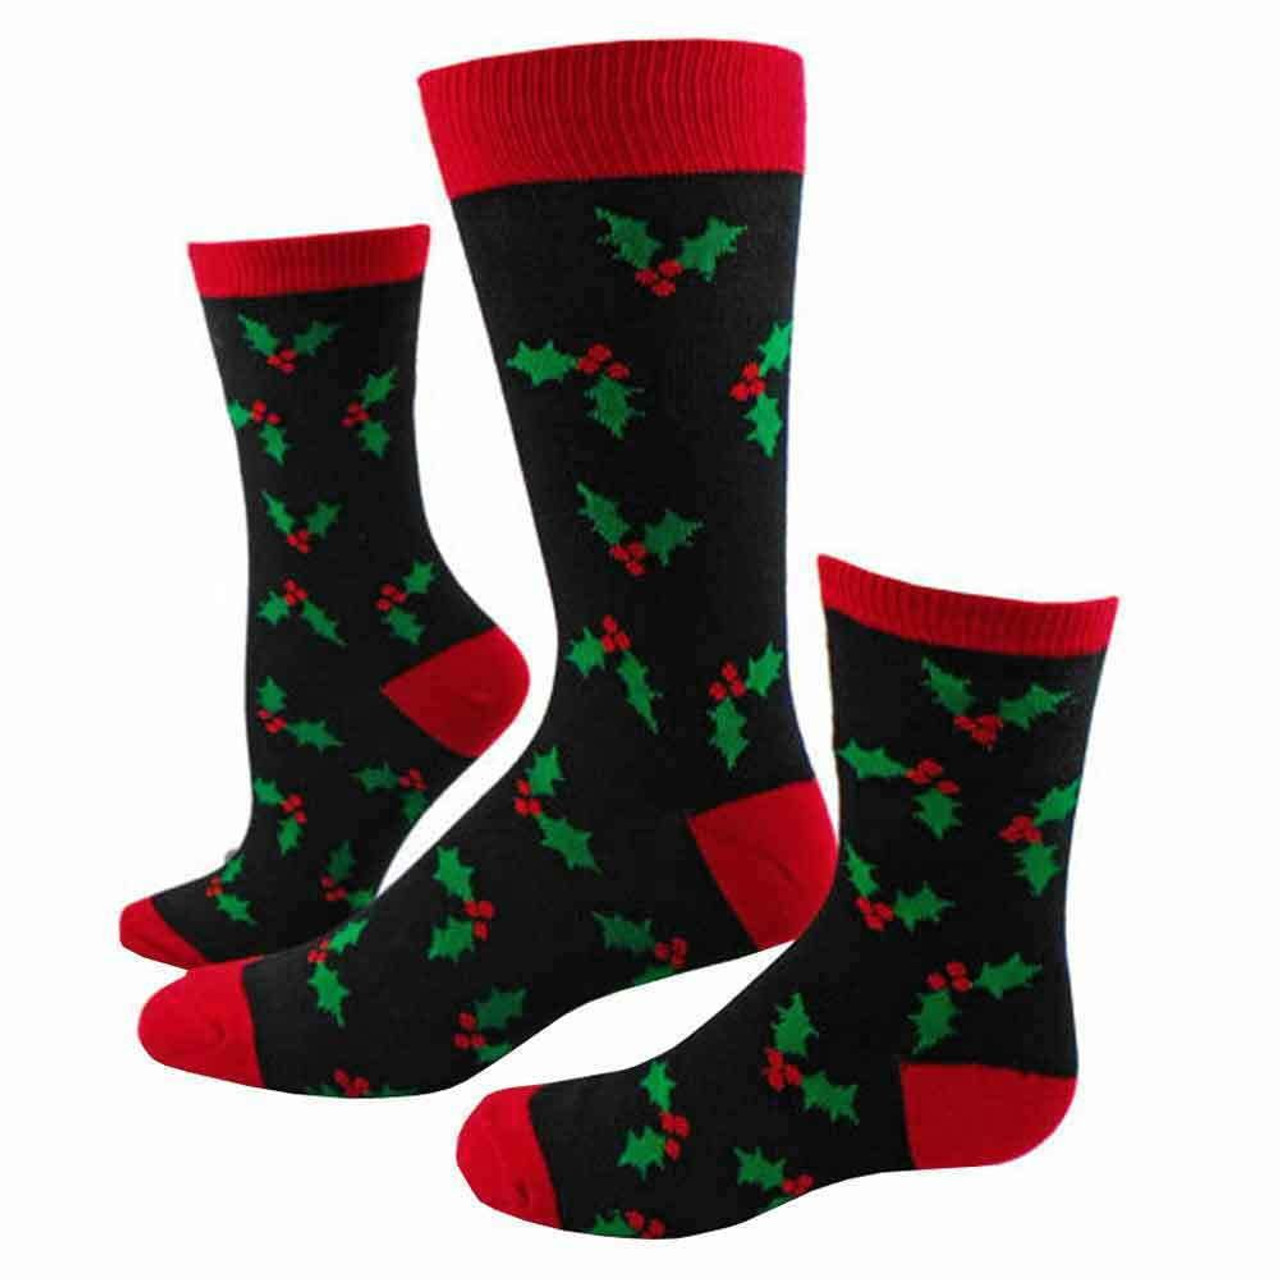 Women's Cotton Toe Socks Barefoot Running Socks -PACK OF 6 PAIRS- Size 9-11  -Lightweight- (White)